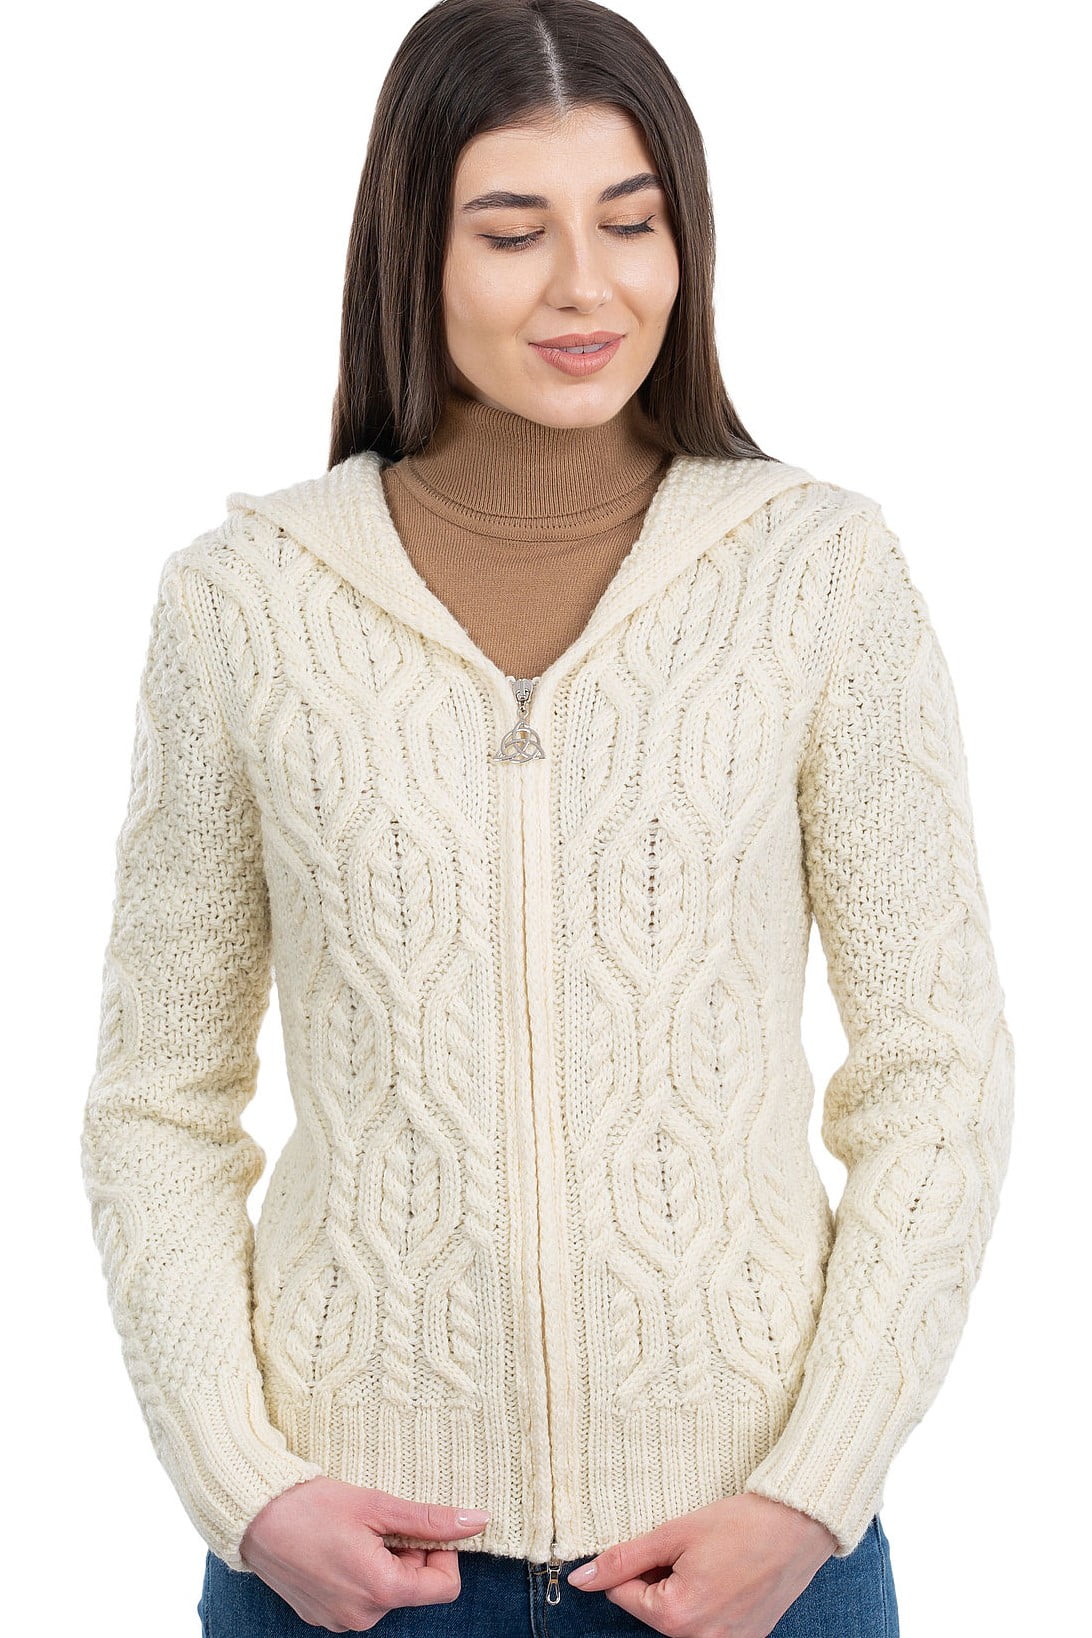 Irish cable knit cardigan - Beige traditional aran sweater - Handmade